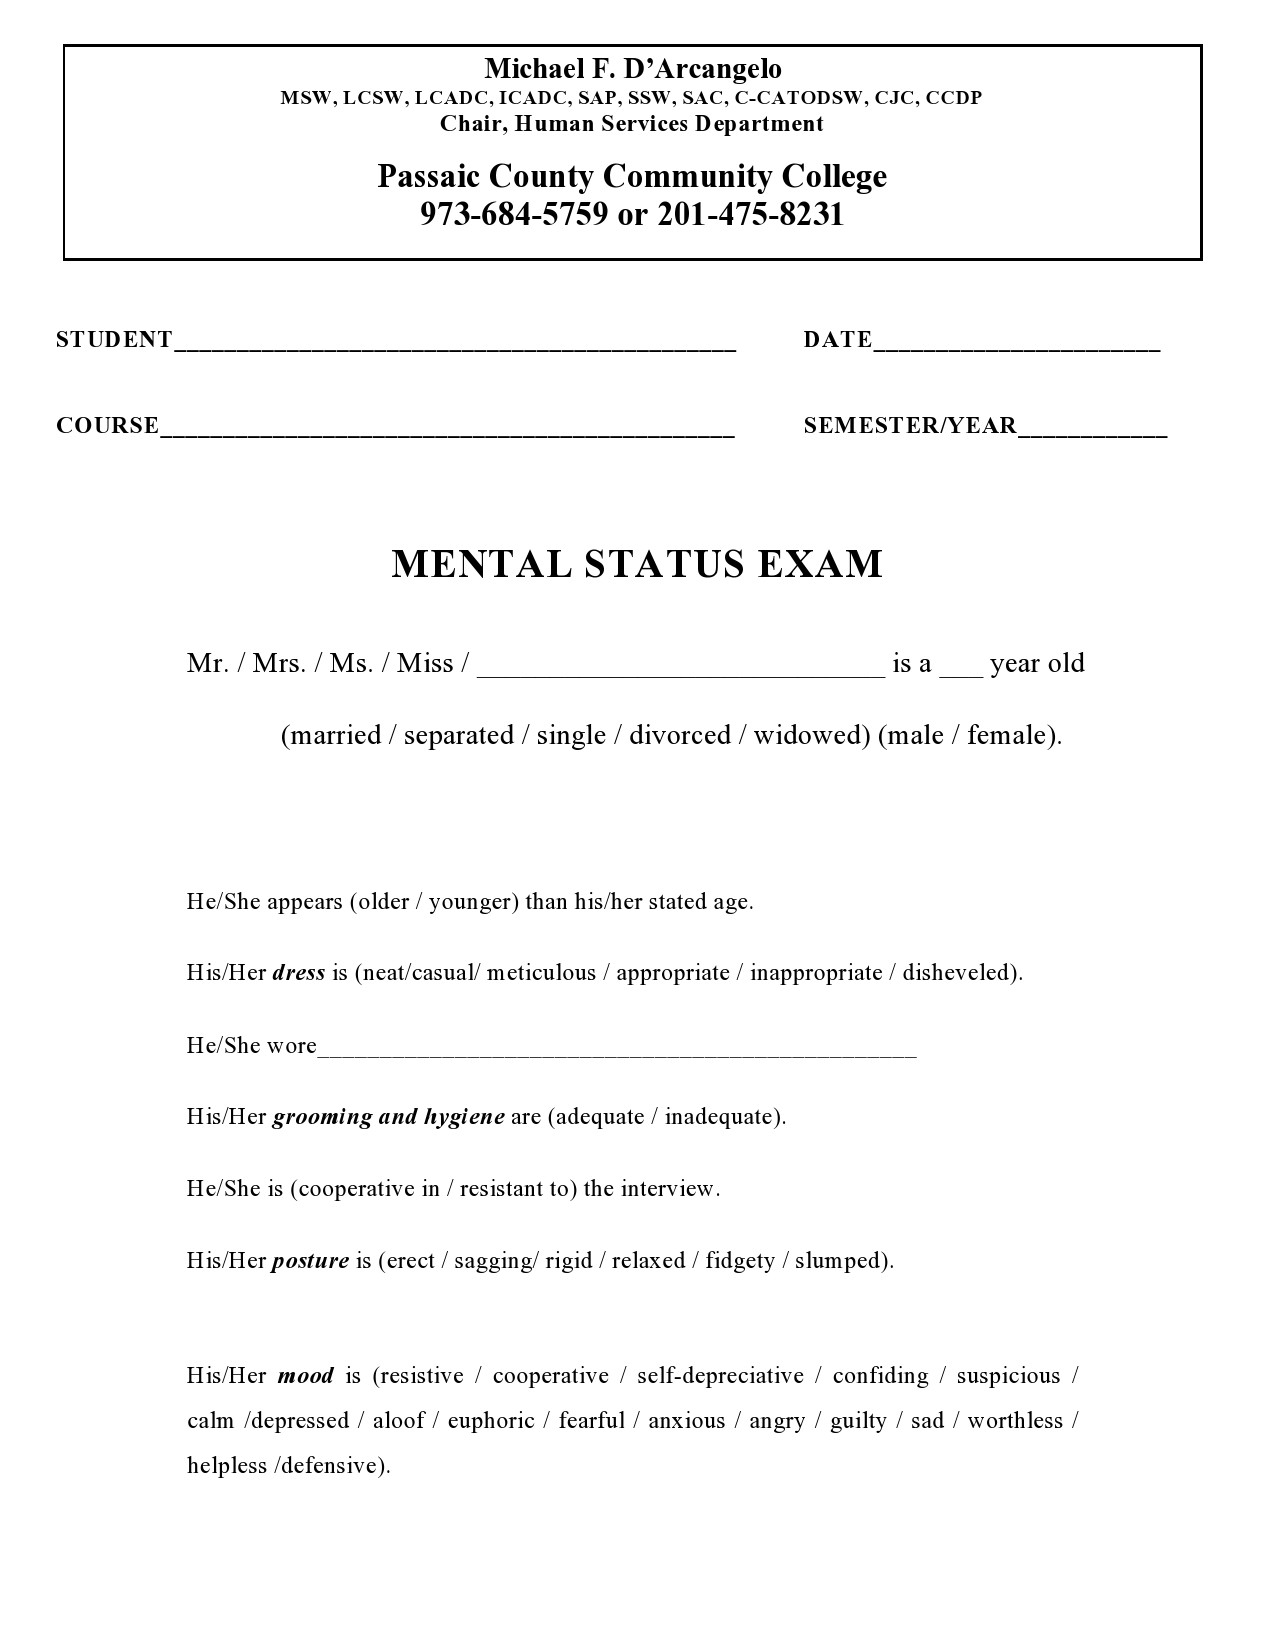 Libre examen mental plantilla de examen de estado mental 42